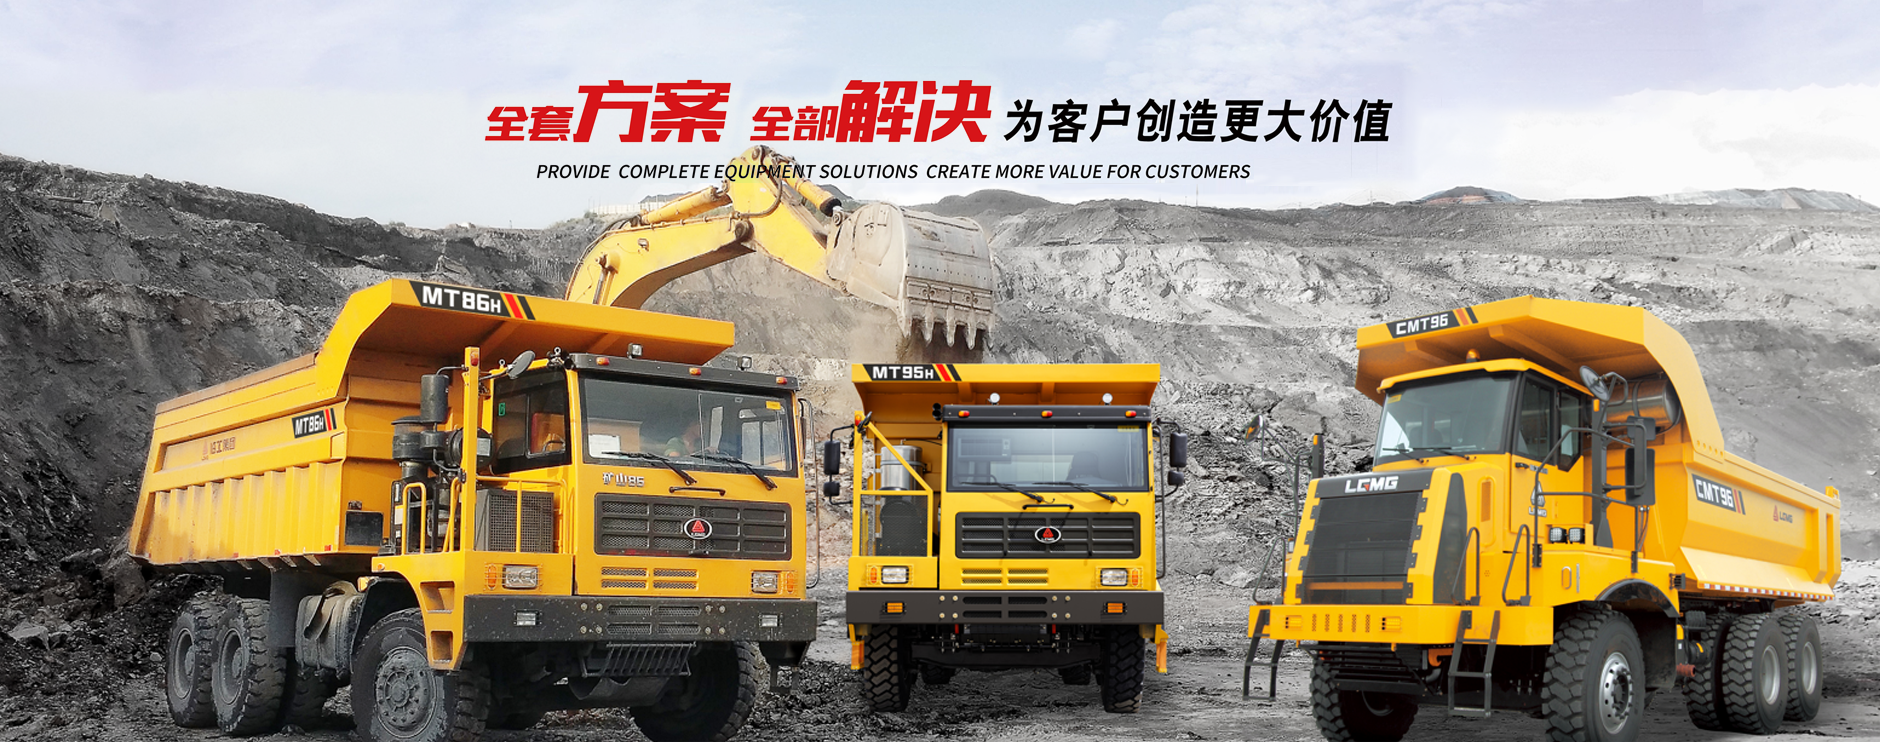 Lingong Heavy Machinery Co., Ltd.